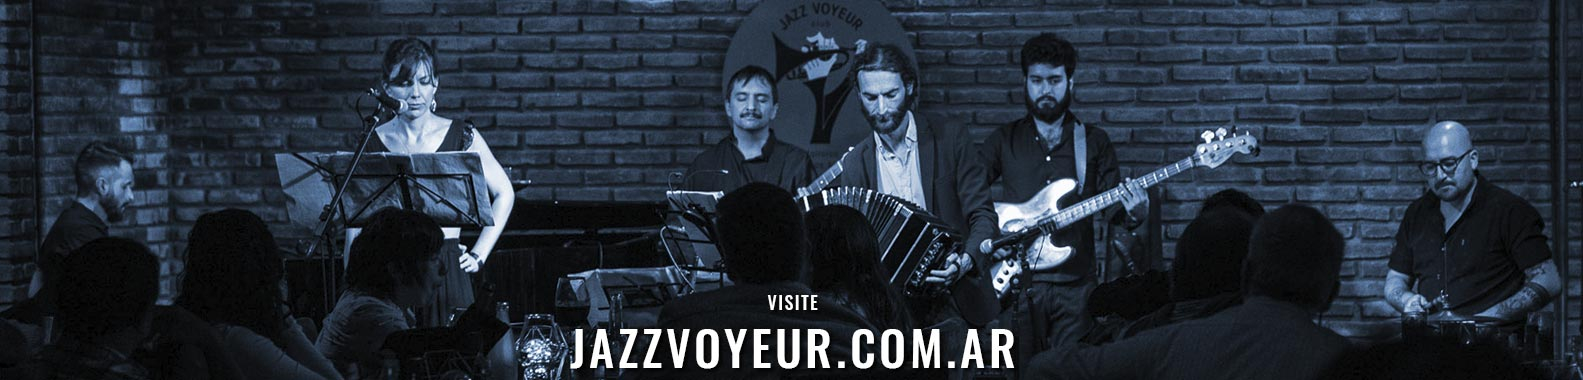 Jazz Voyeur Club